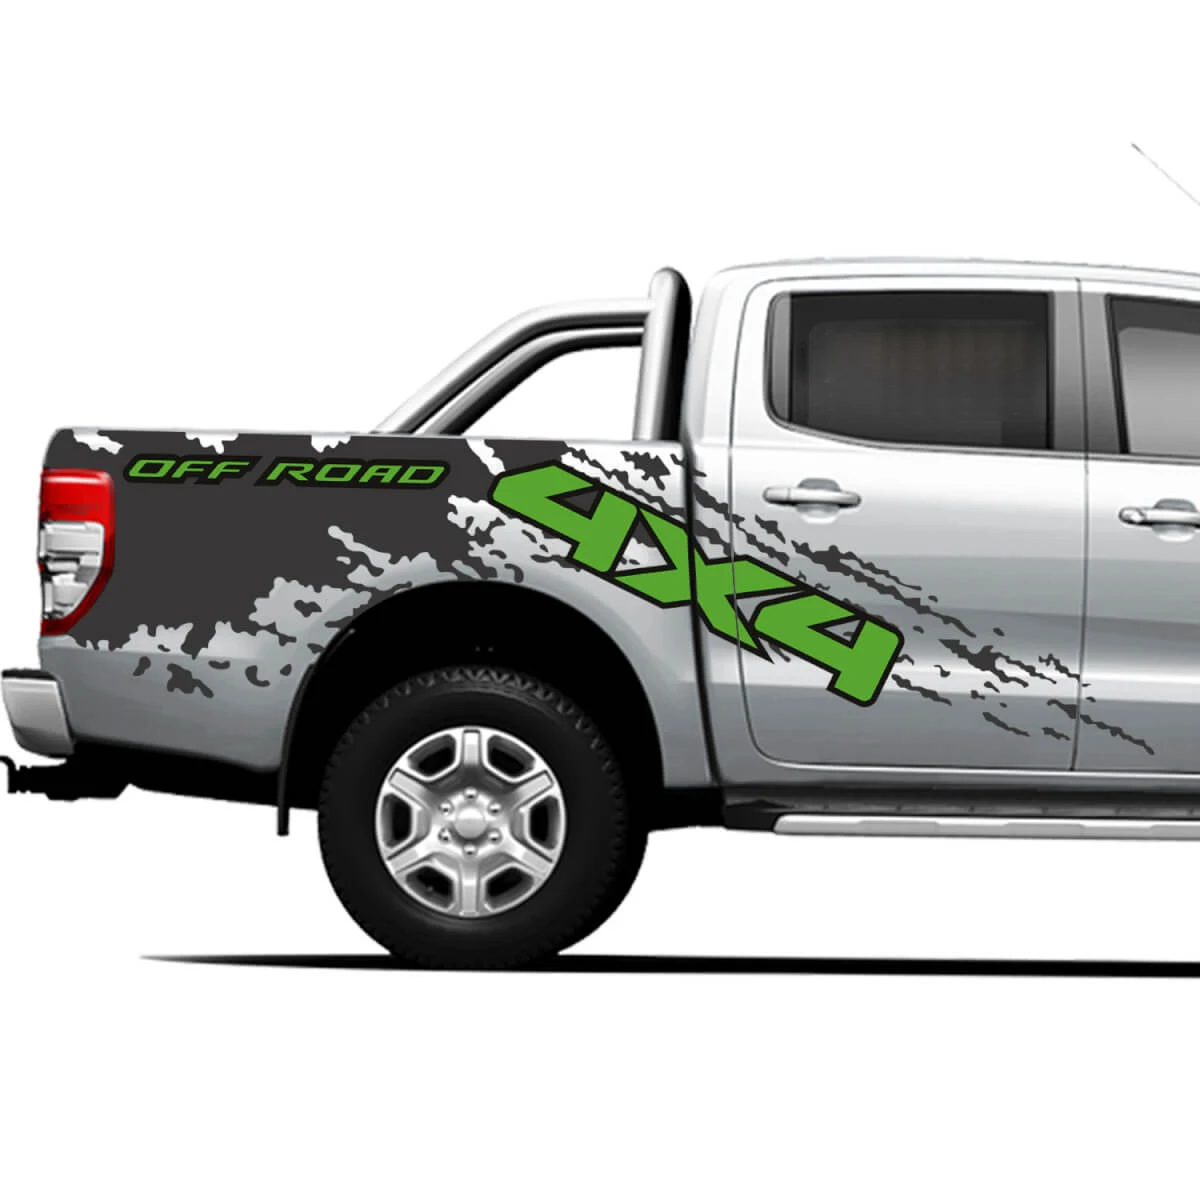 

Car Stickers Vinyl Decals Stickers Side bed bands 4x4 graphic For Ford Ranger Raptor Isuzu Dmax Nissan NAVARA Accessories